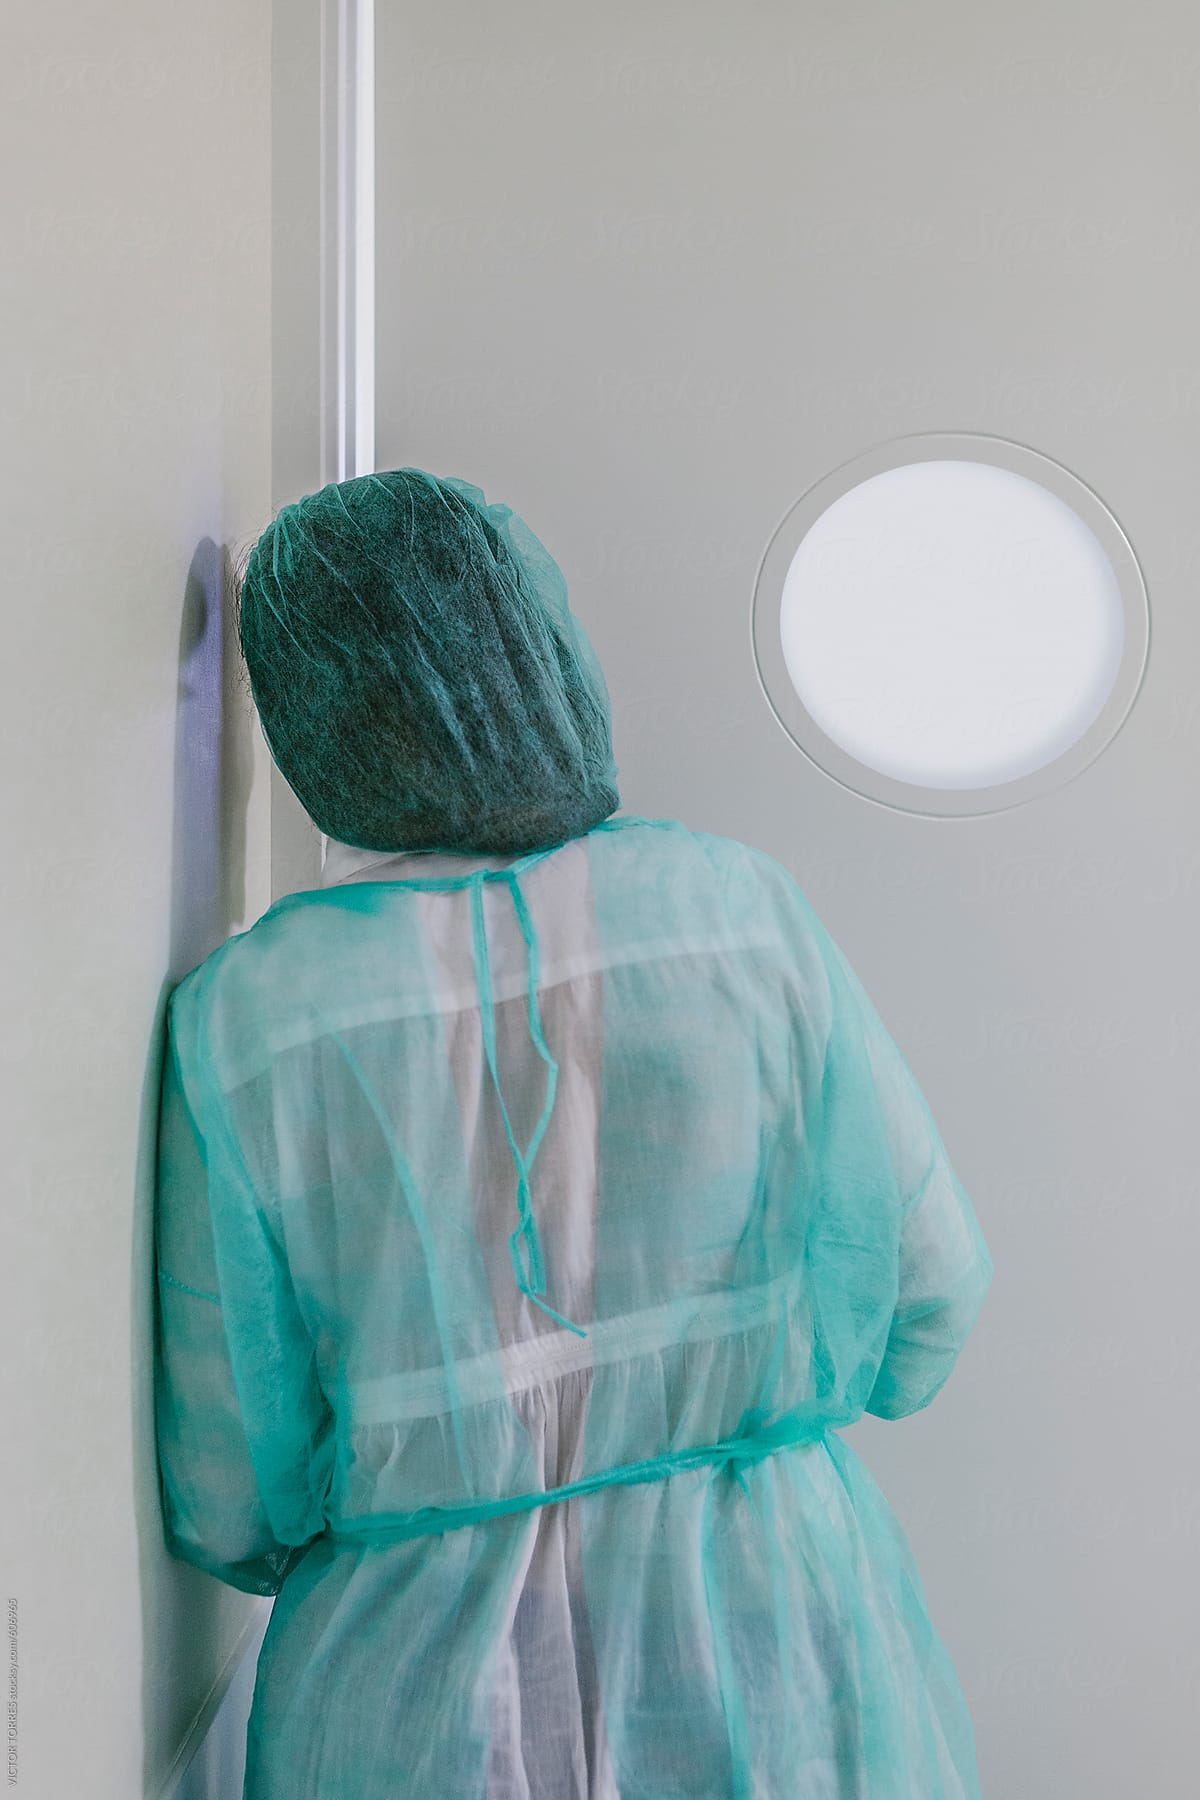 Woman Looking Behind a Hospital Door